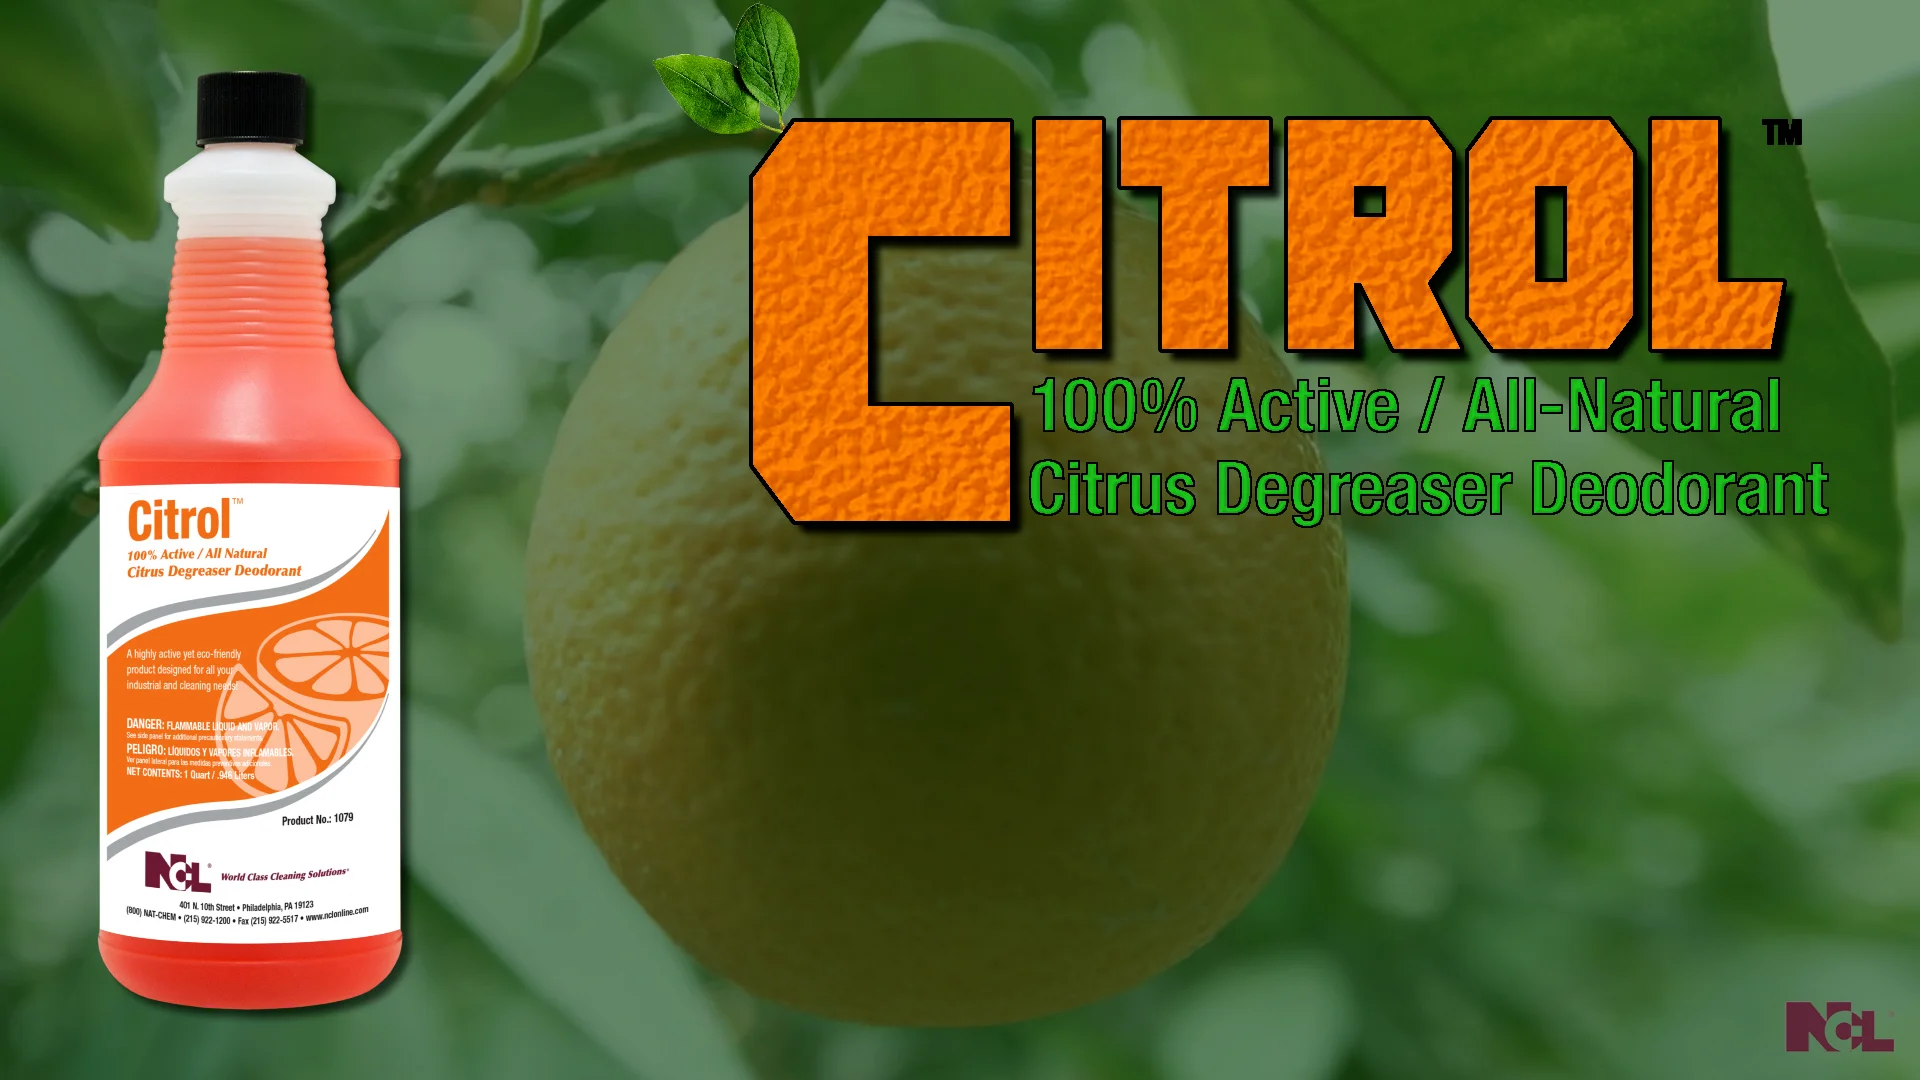 Citrol™ 100% Active - All Natural Citrus Degreaser Deodorizer on Vimeo